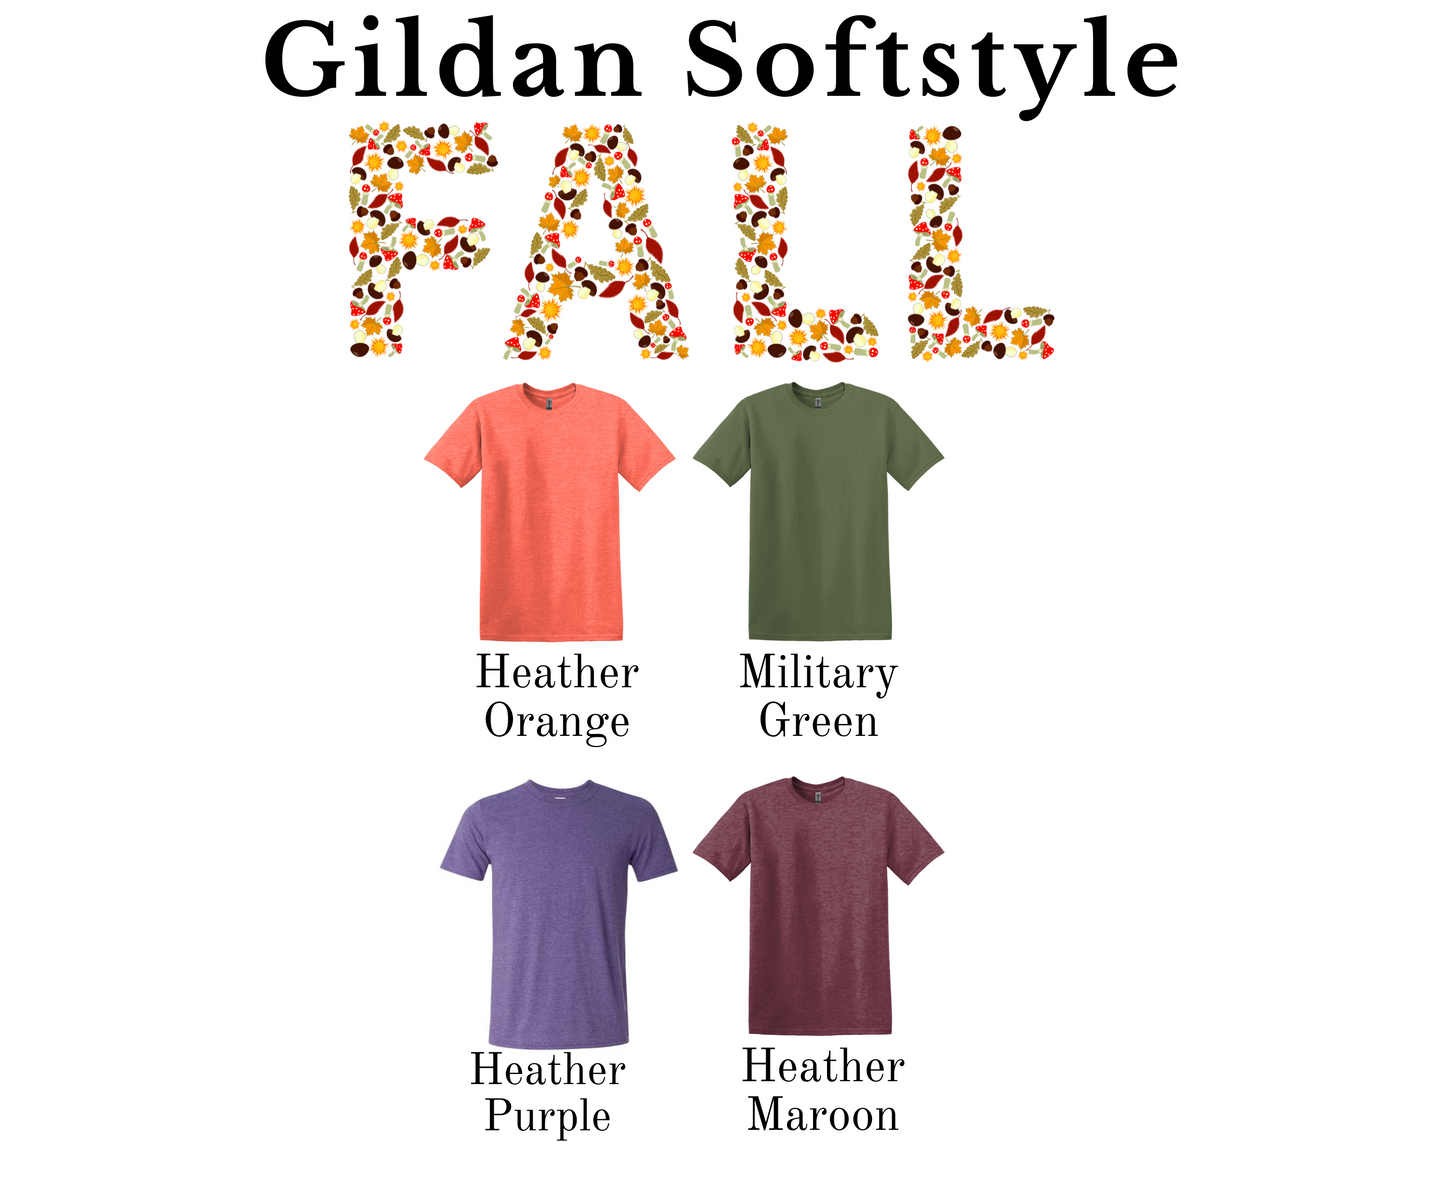 Do You Want a Balloon IT Horror Gildan Softstyle T-shirt